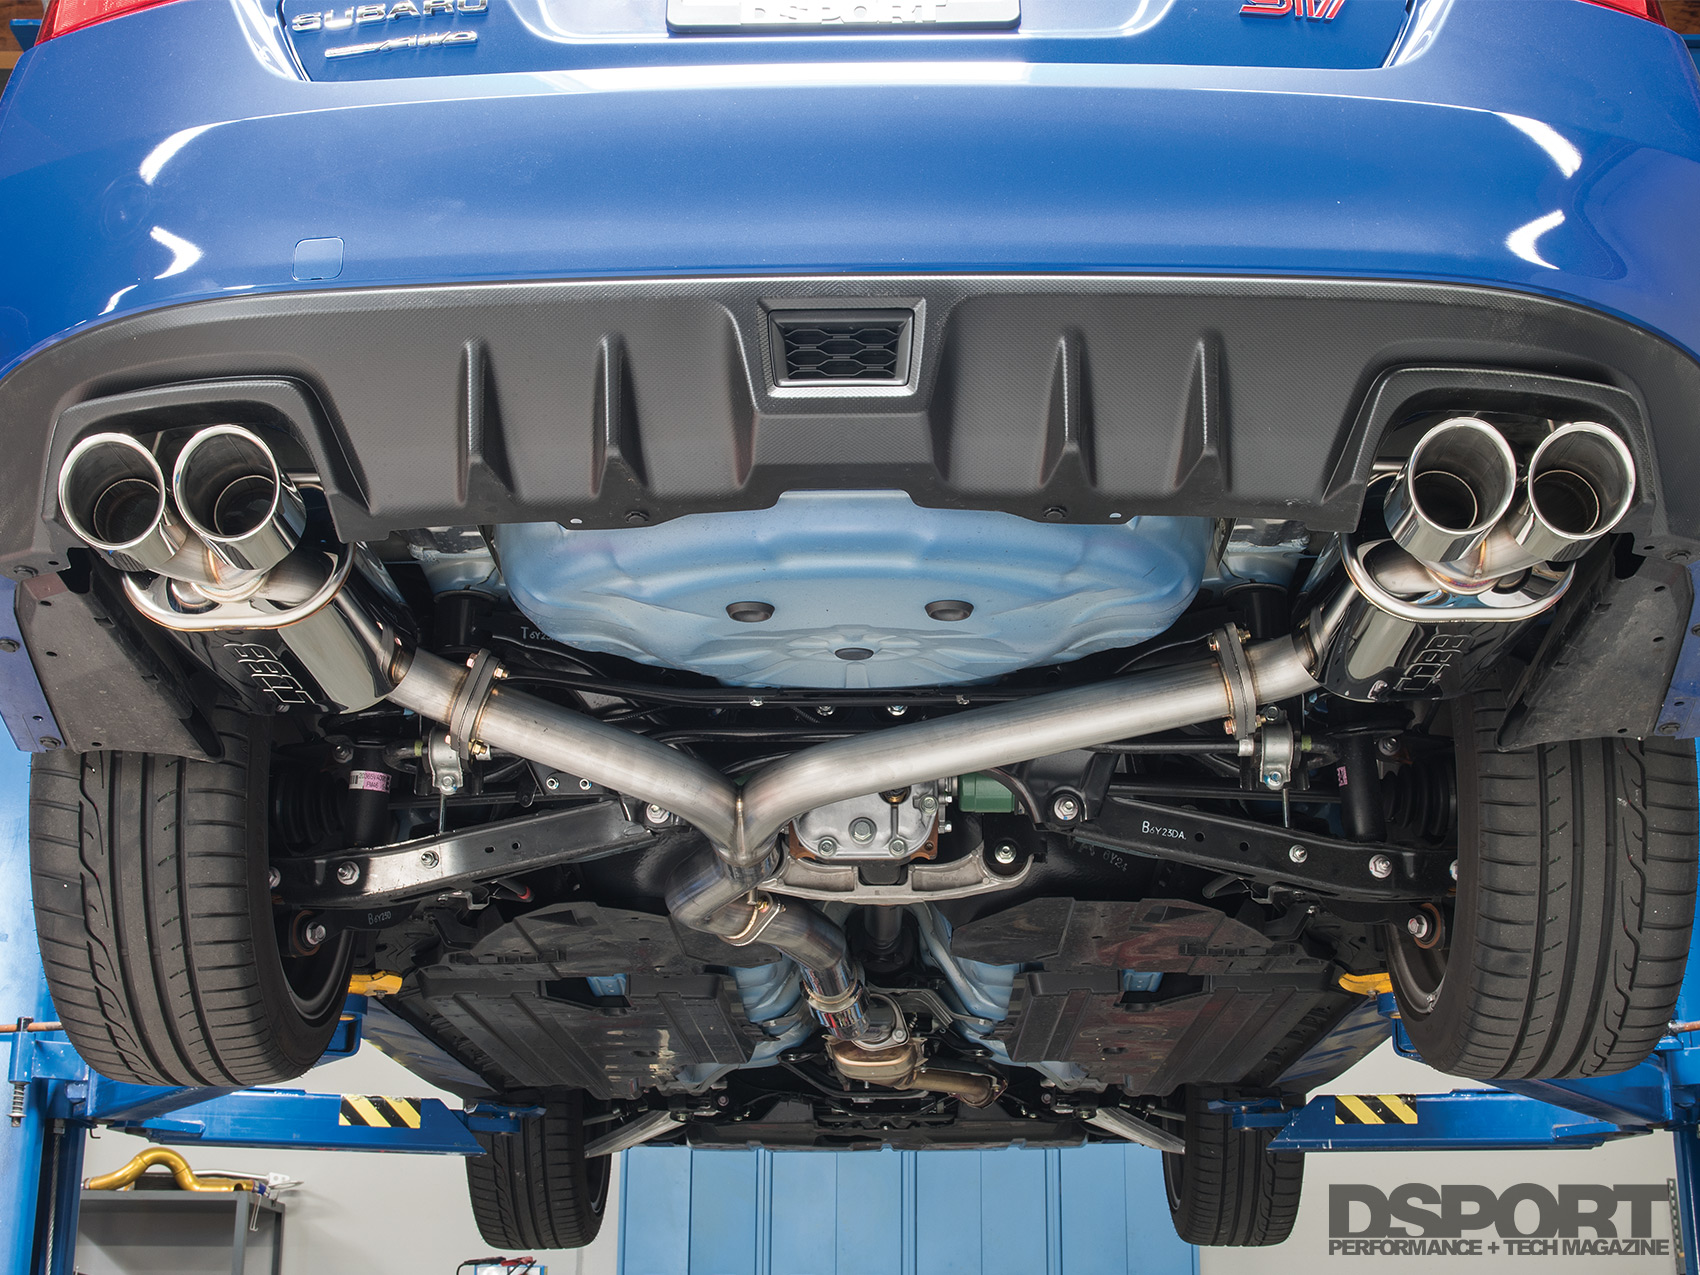 COBB Tuning SS 3 Inch Cat-Back Exhaust | 2017 Subaru WRX STI Exhaust